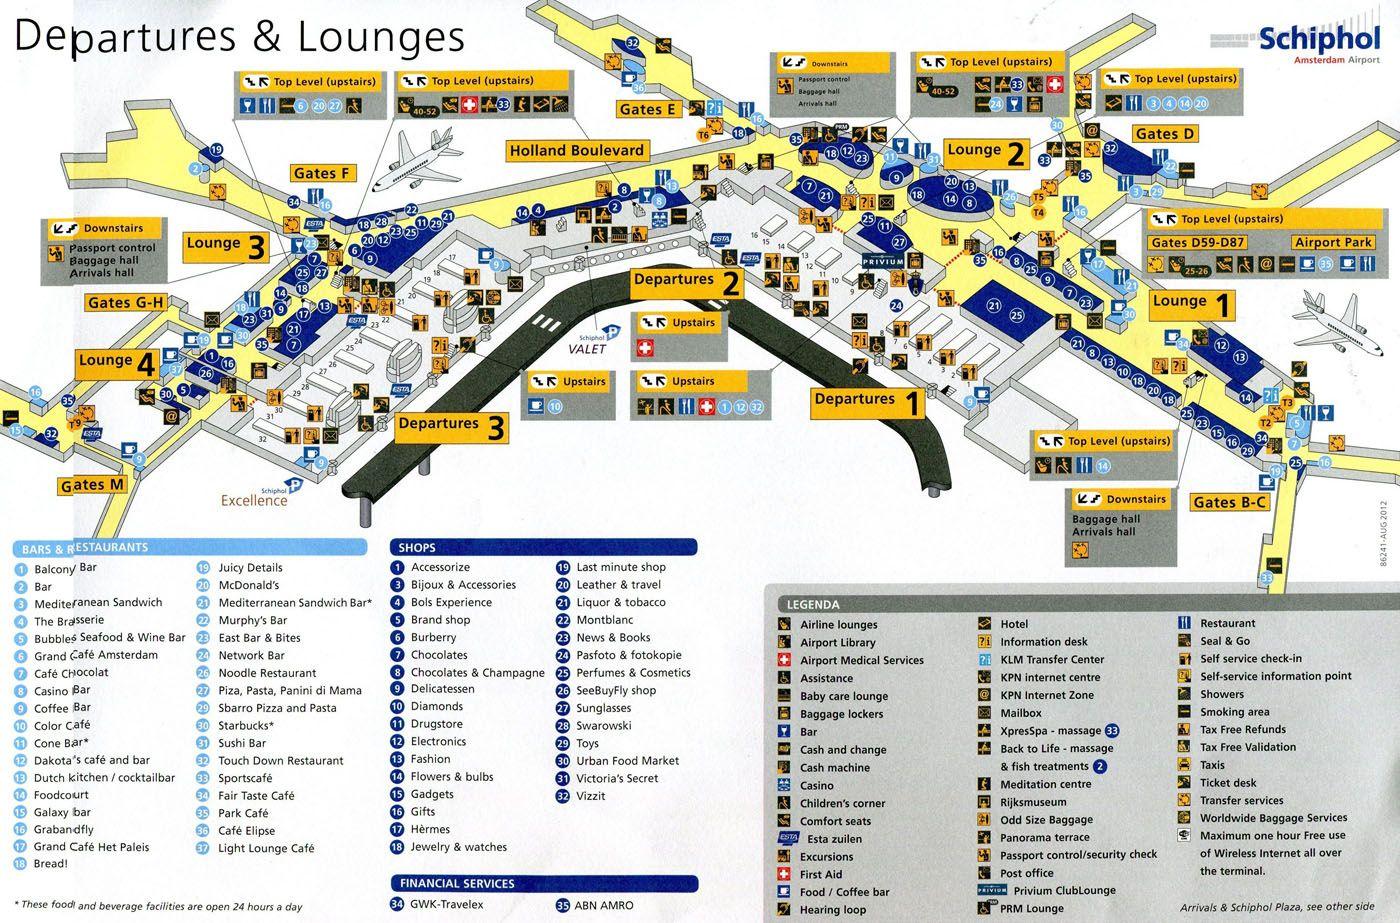 Schiphol Airport Terminal Map